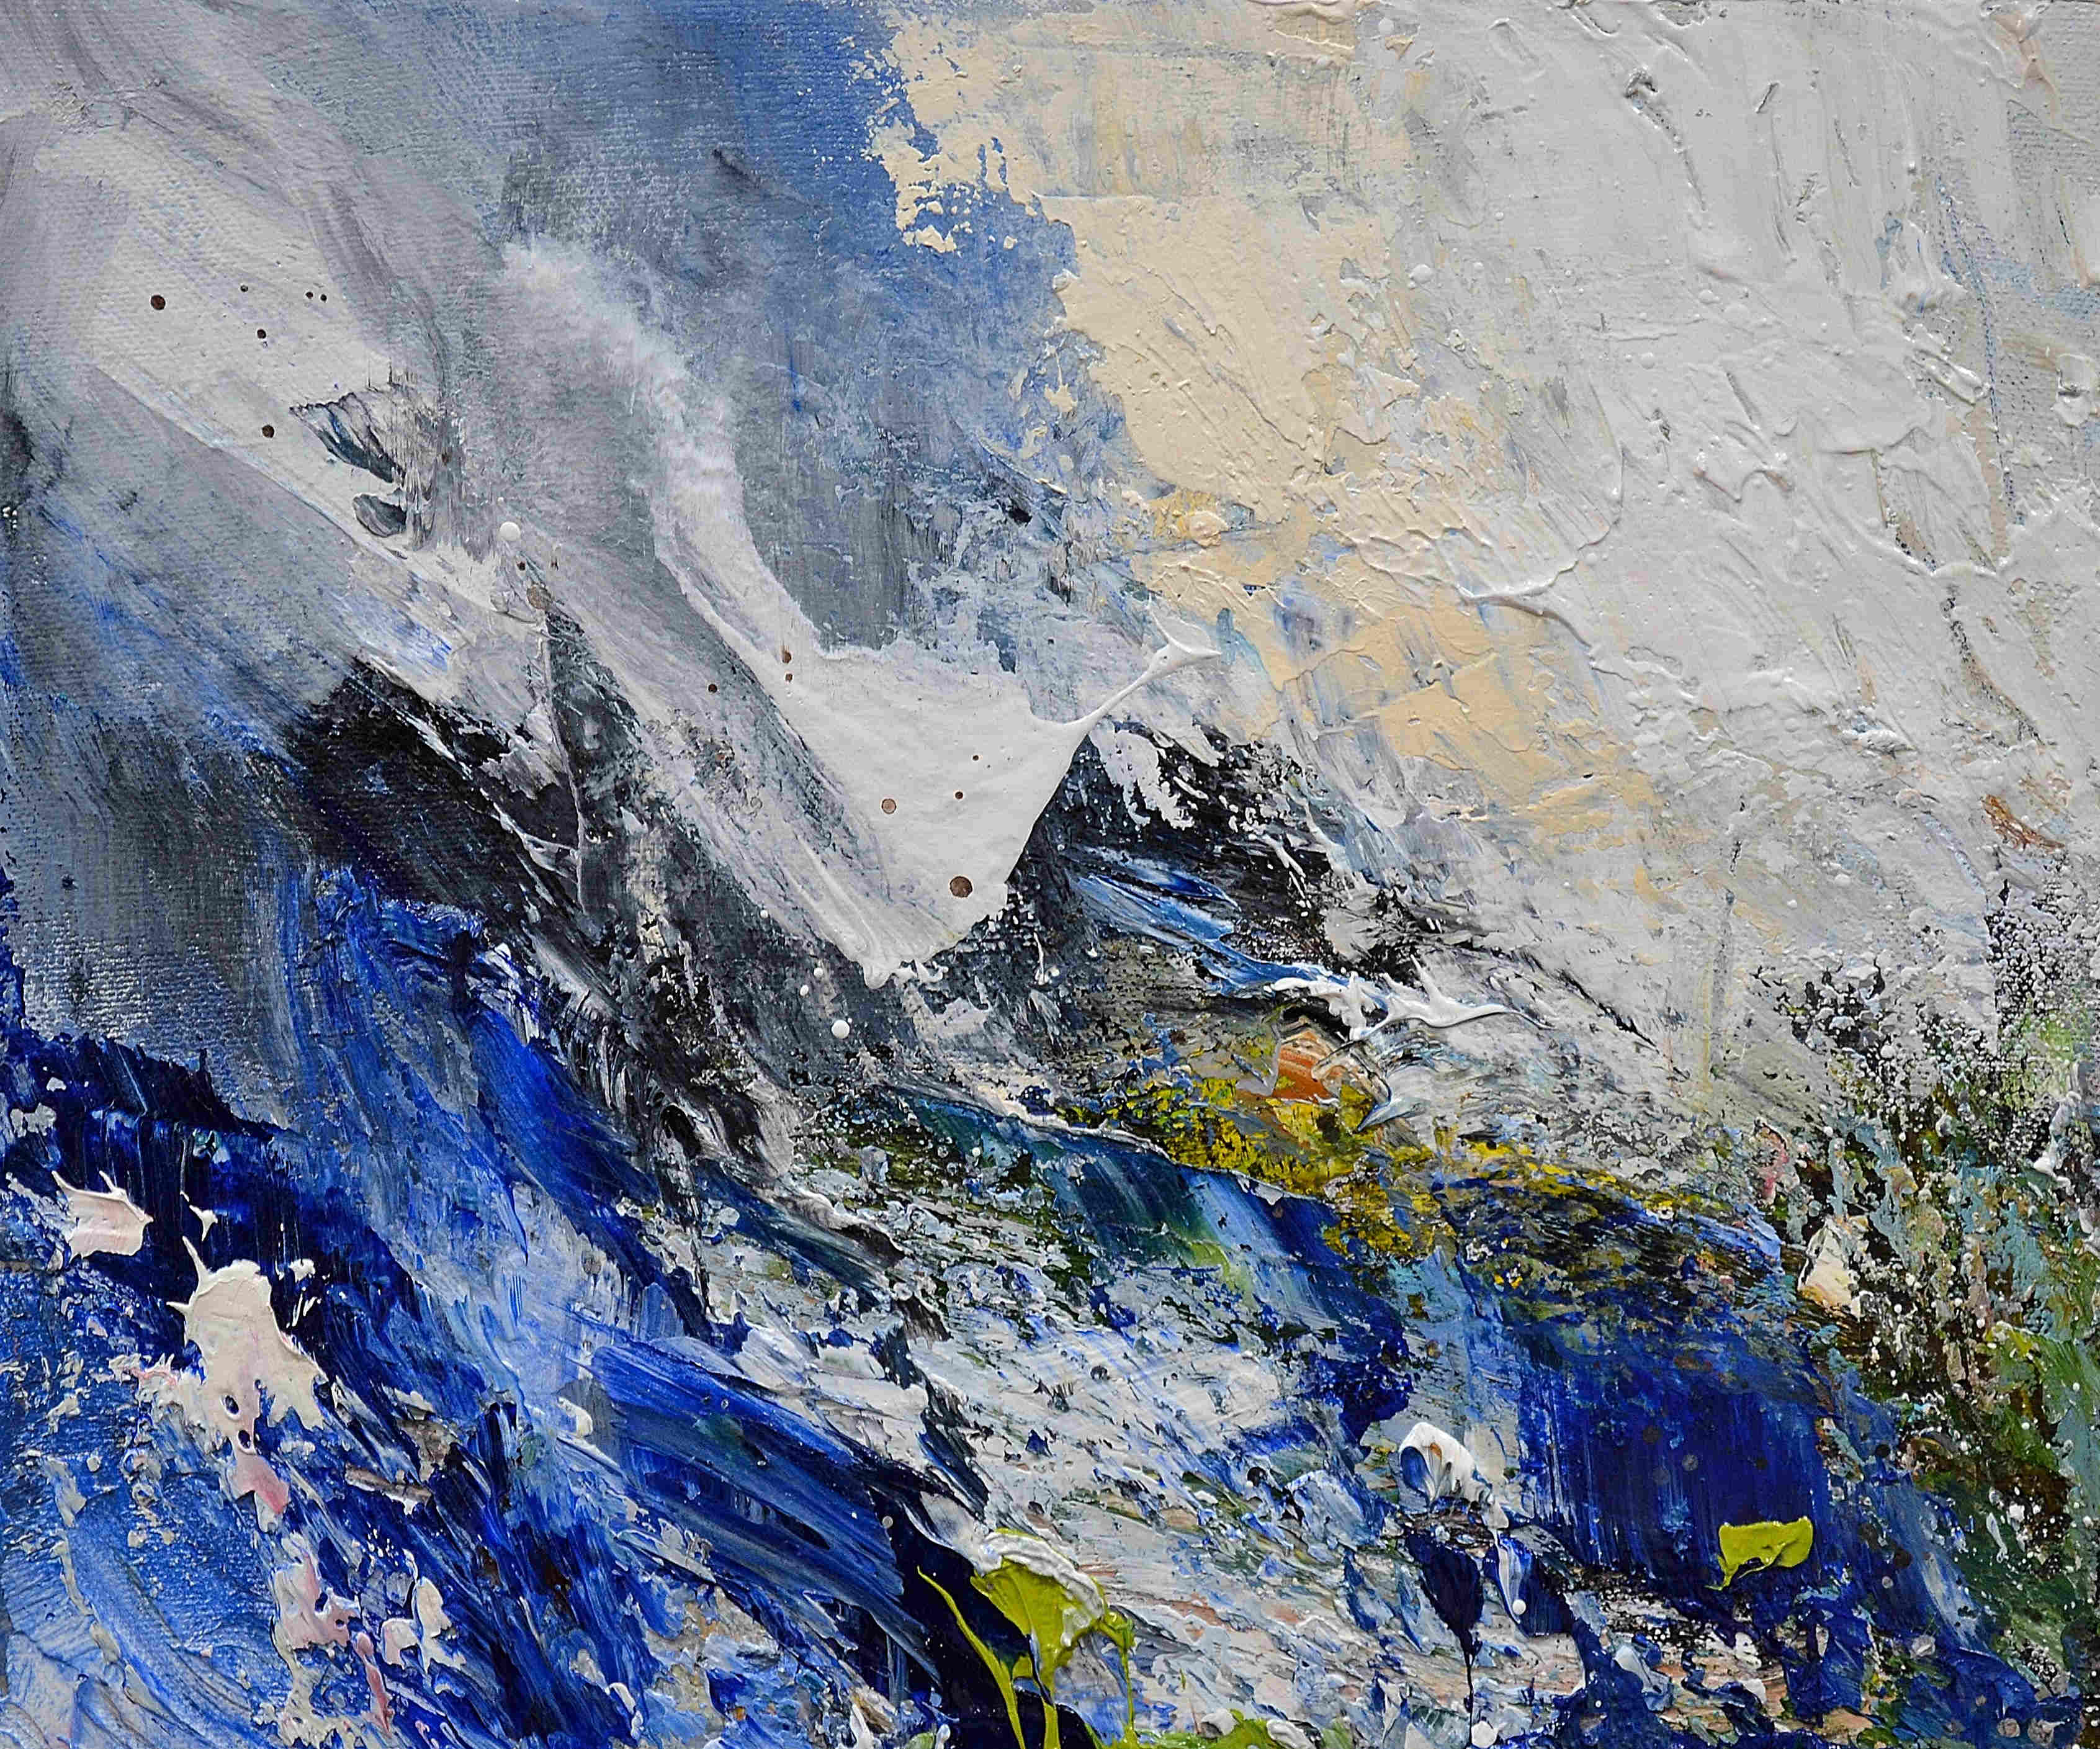 'Monolith, Rock, Strong Wind' by artist Matthew Bourne